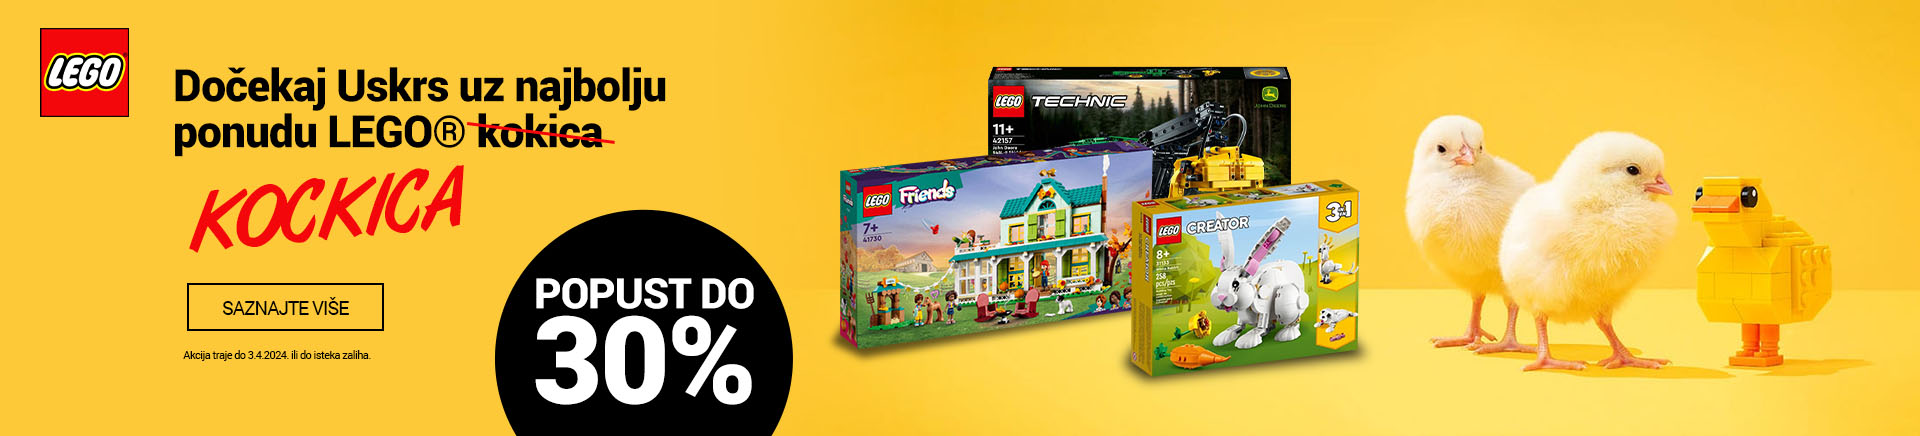 HR Uskrs LEGO kokice kockice 30posto MOBILE za APP 760x872.jpg